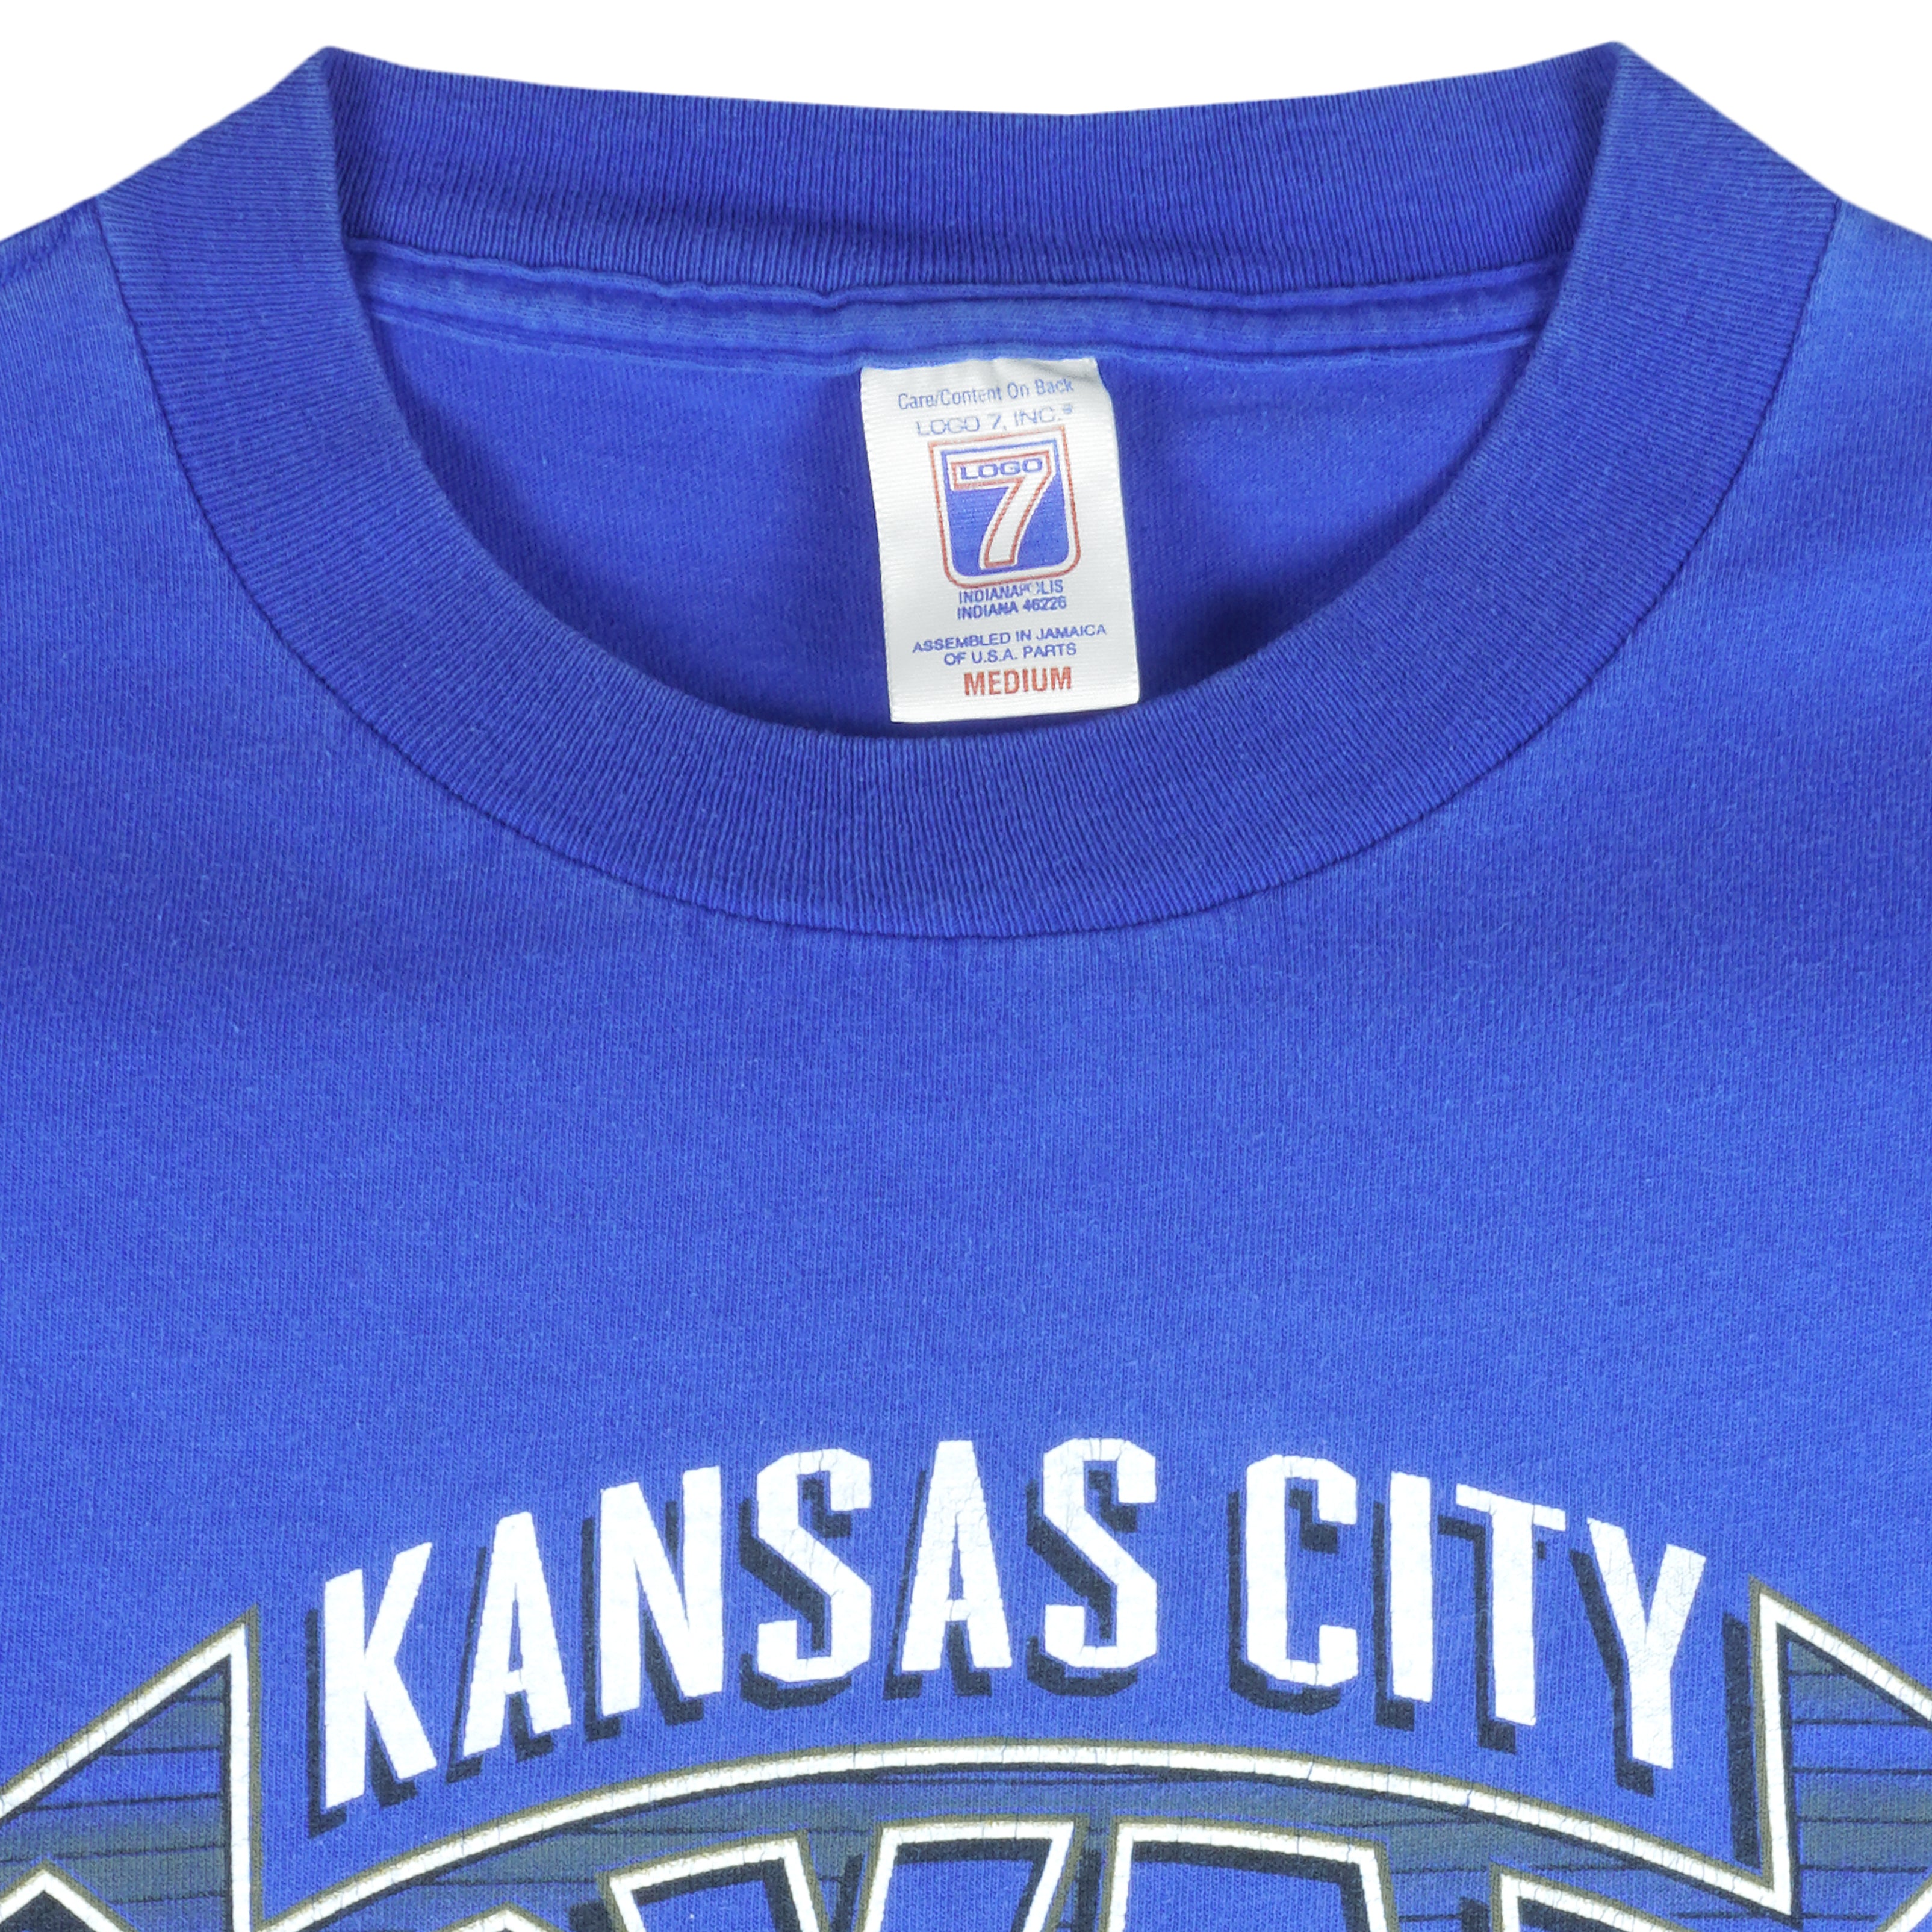 Nike Kansas City Royals Vintage in Kansas City Royals Team Shop 